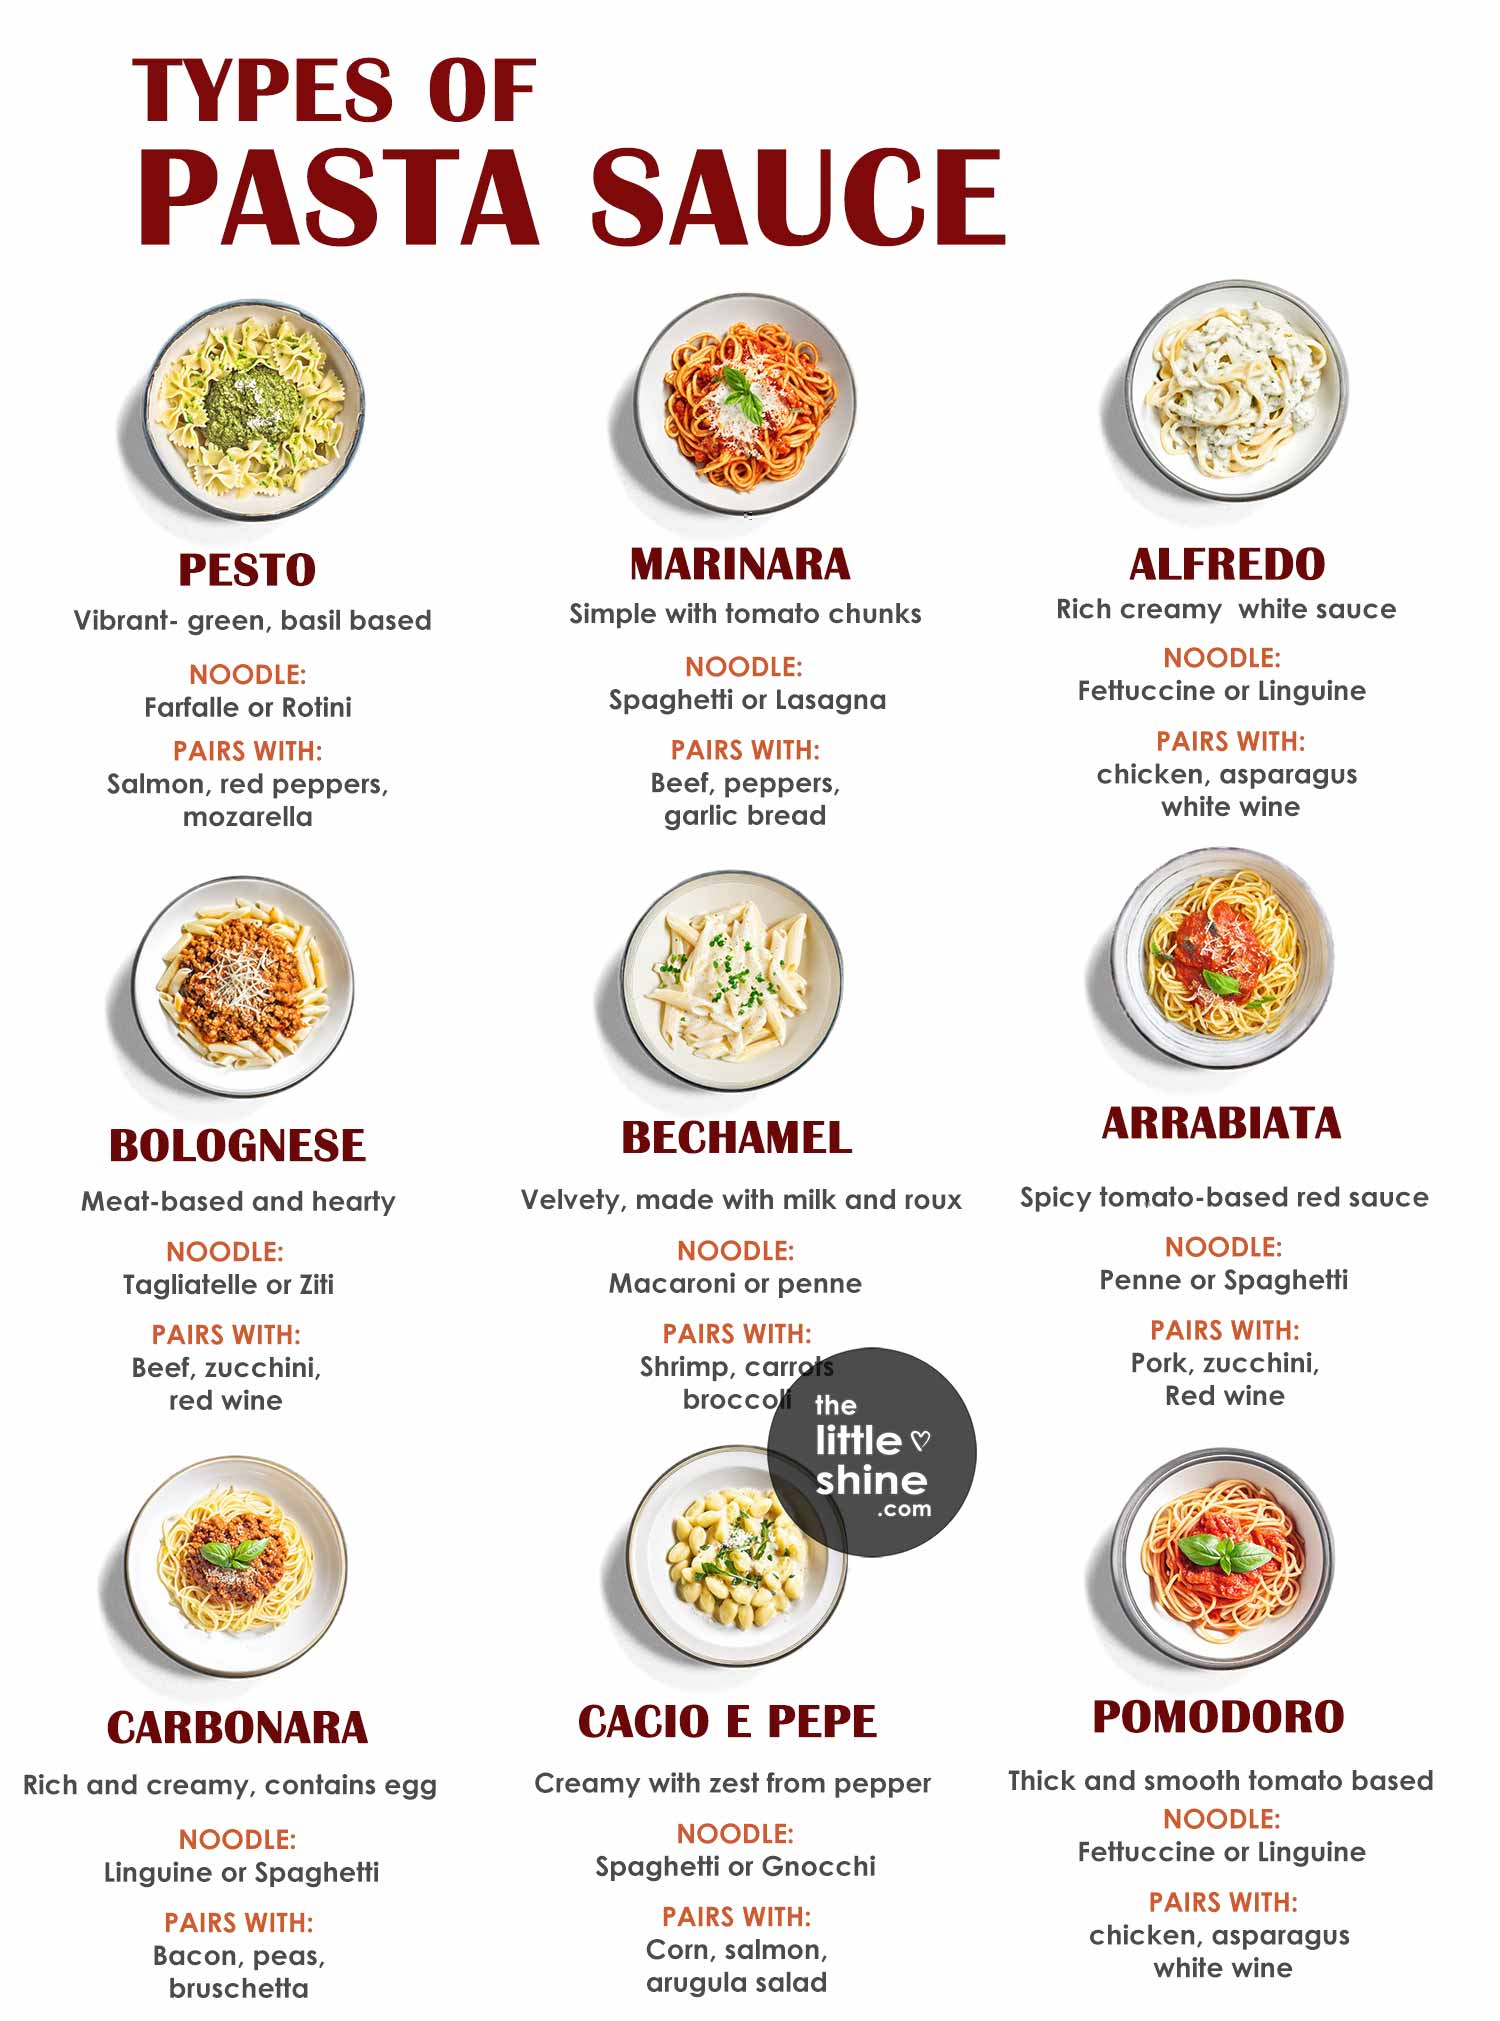 10 Popular Types of Pasta Sauces